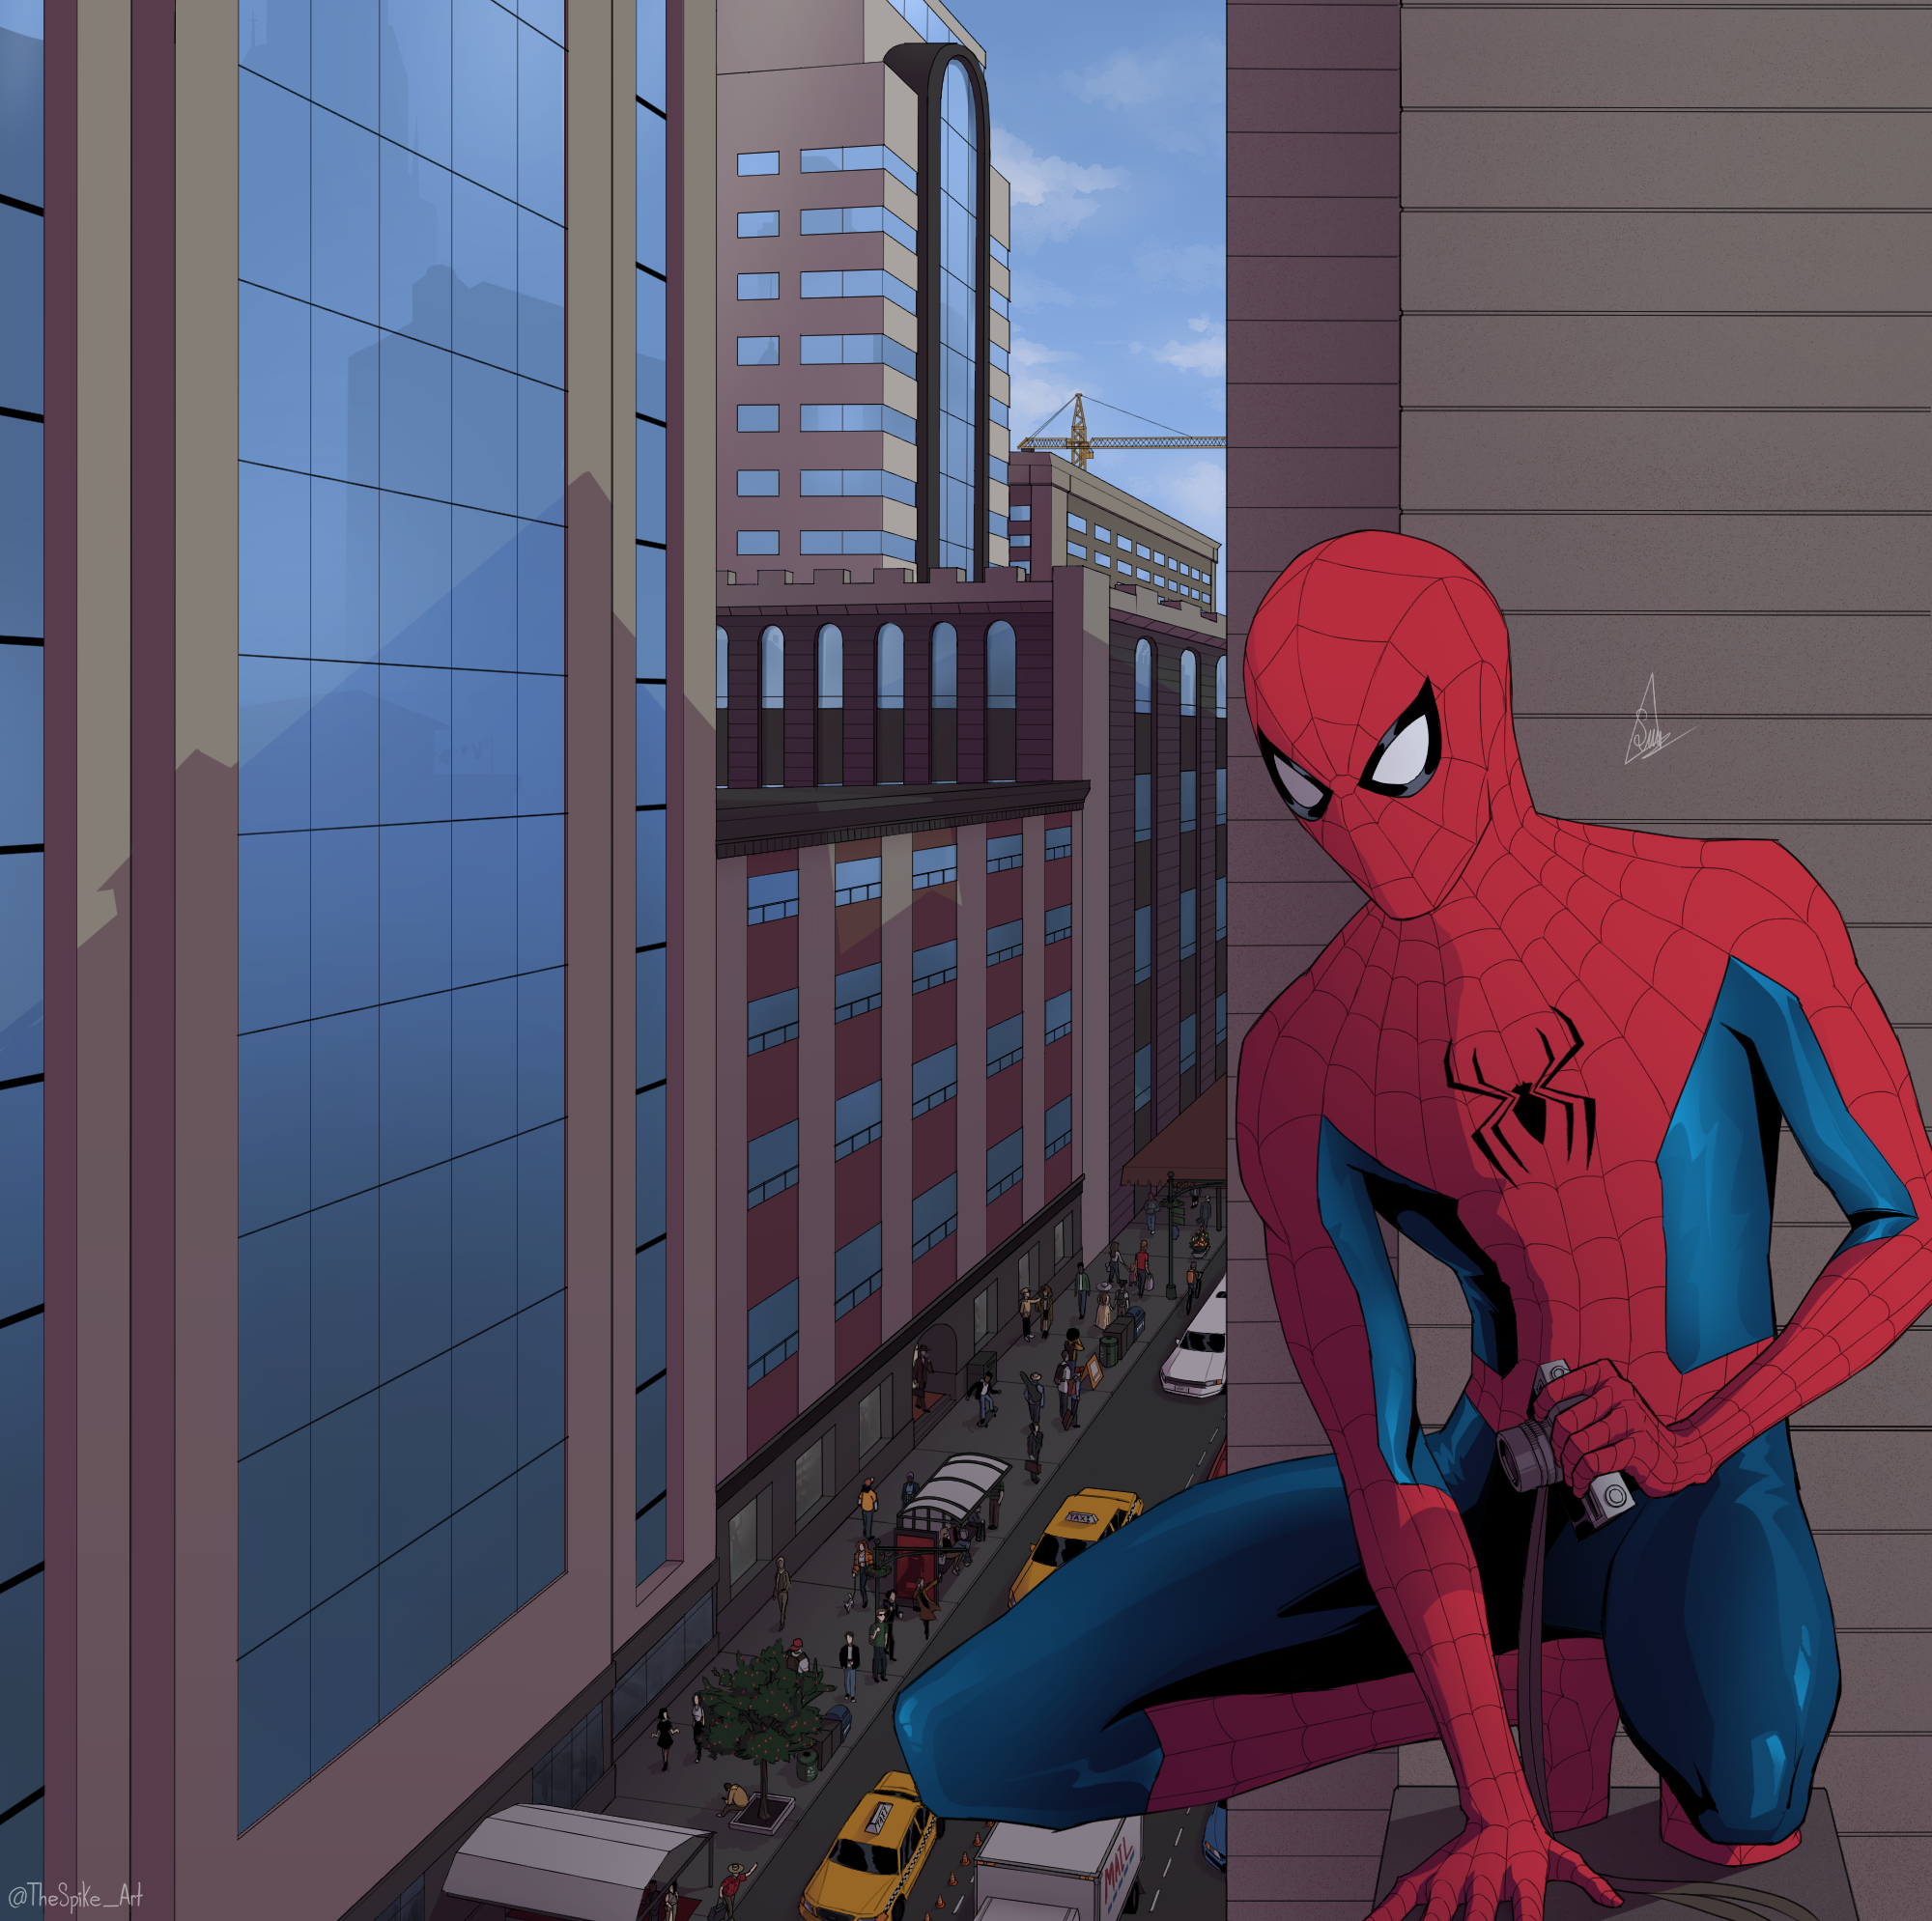 Spider - Man: Web Of Shadows (Movie) by Potiuk on @DeviantArt